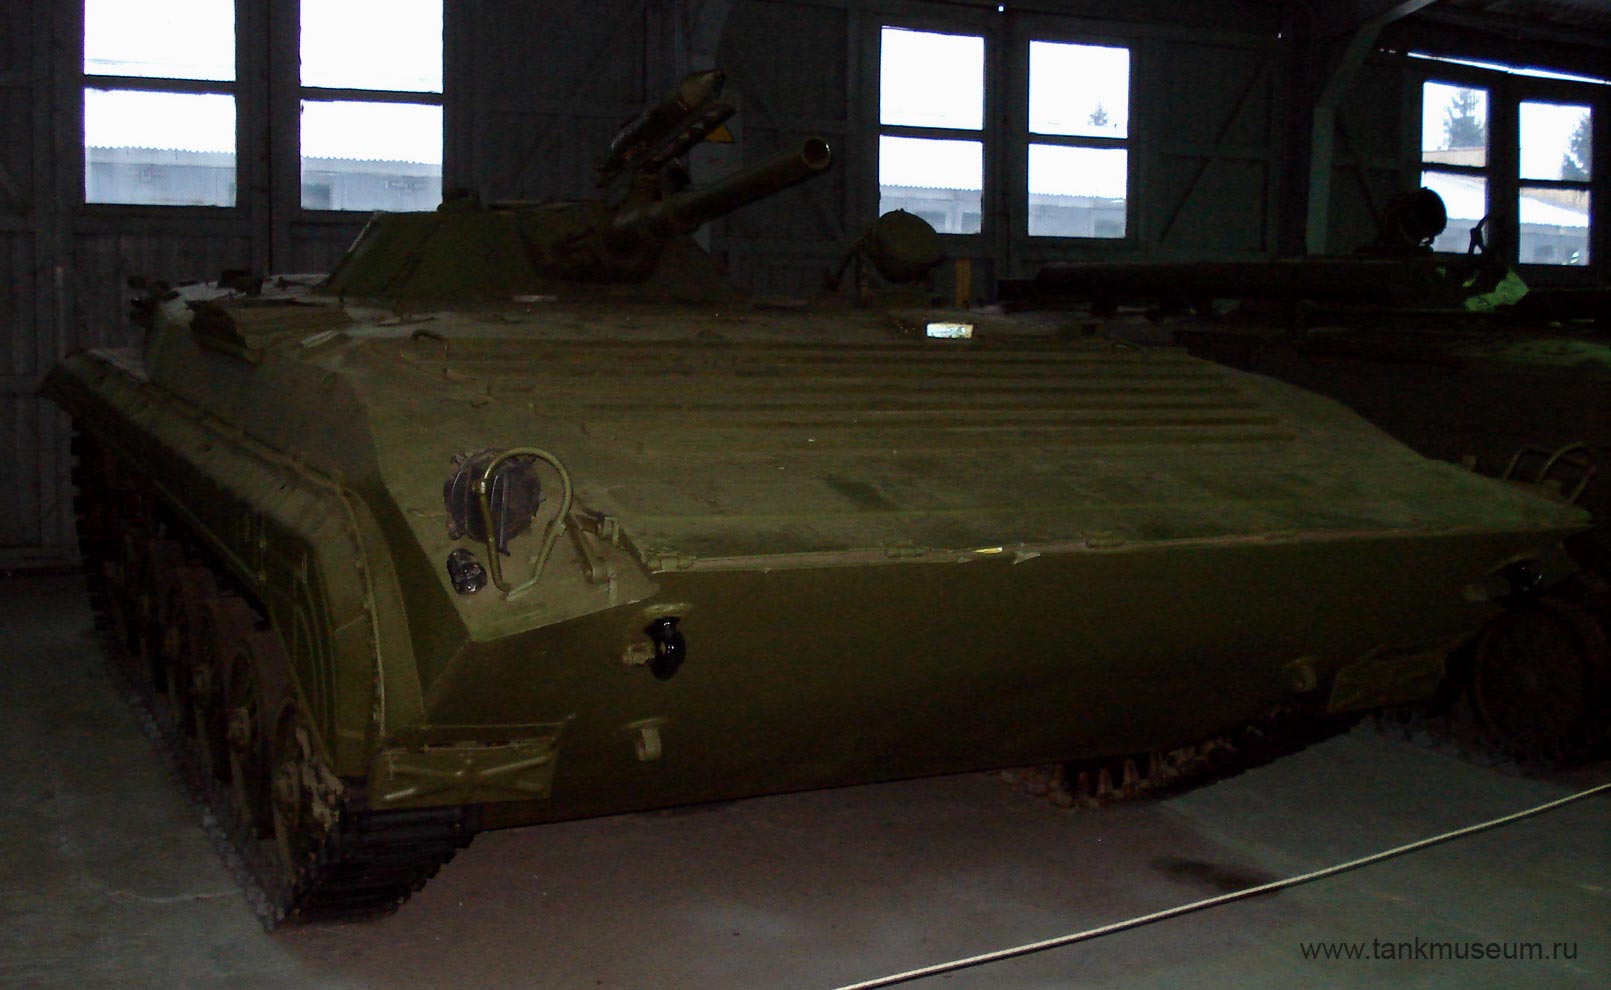 Kubinka tank museum BMP-1K infantry commander fighting vehicle